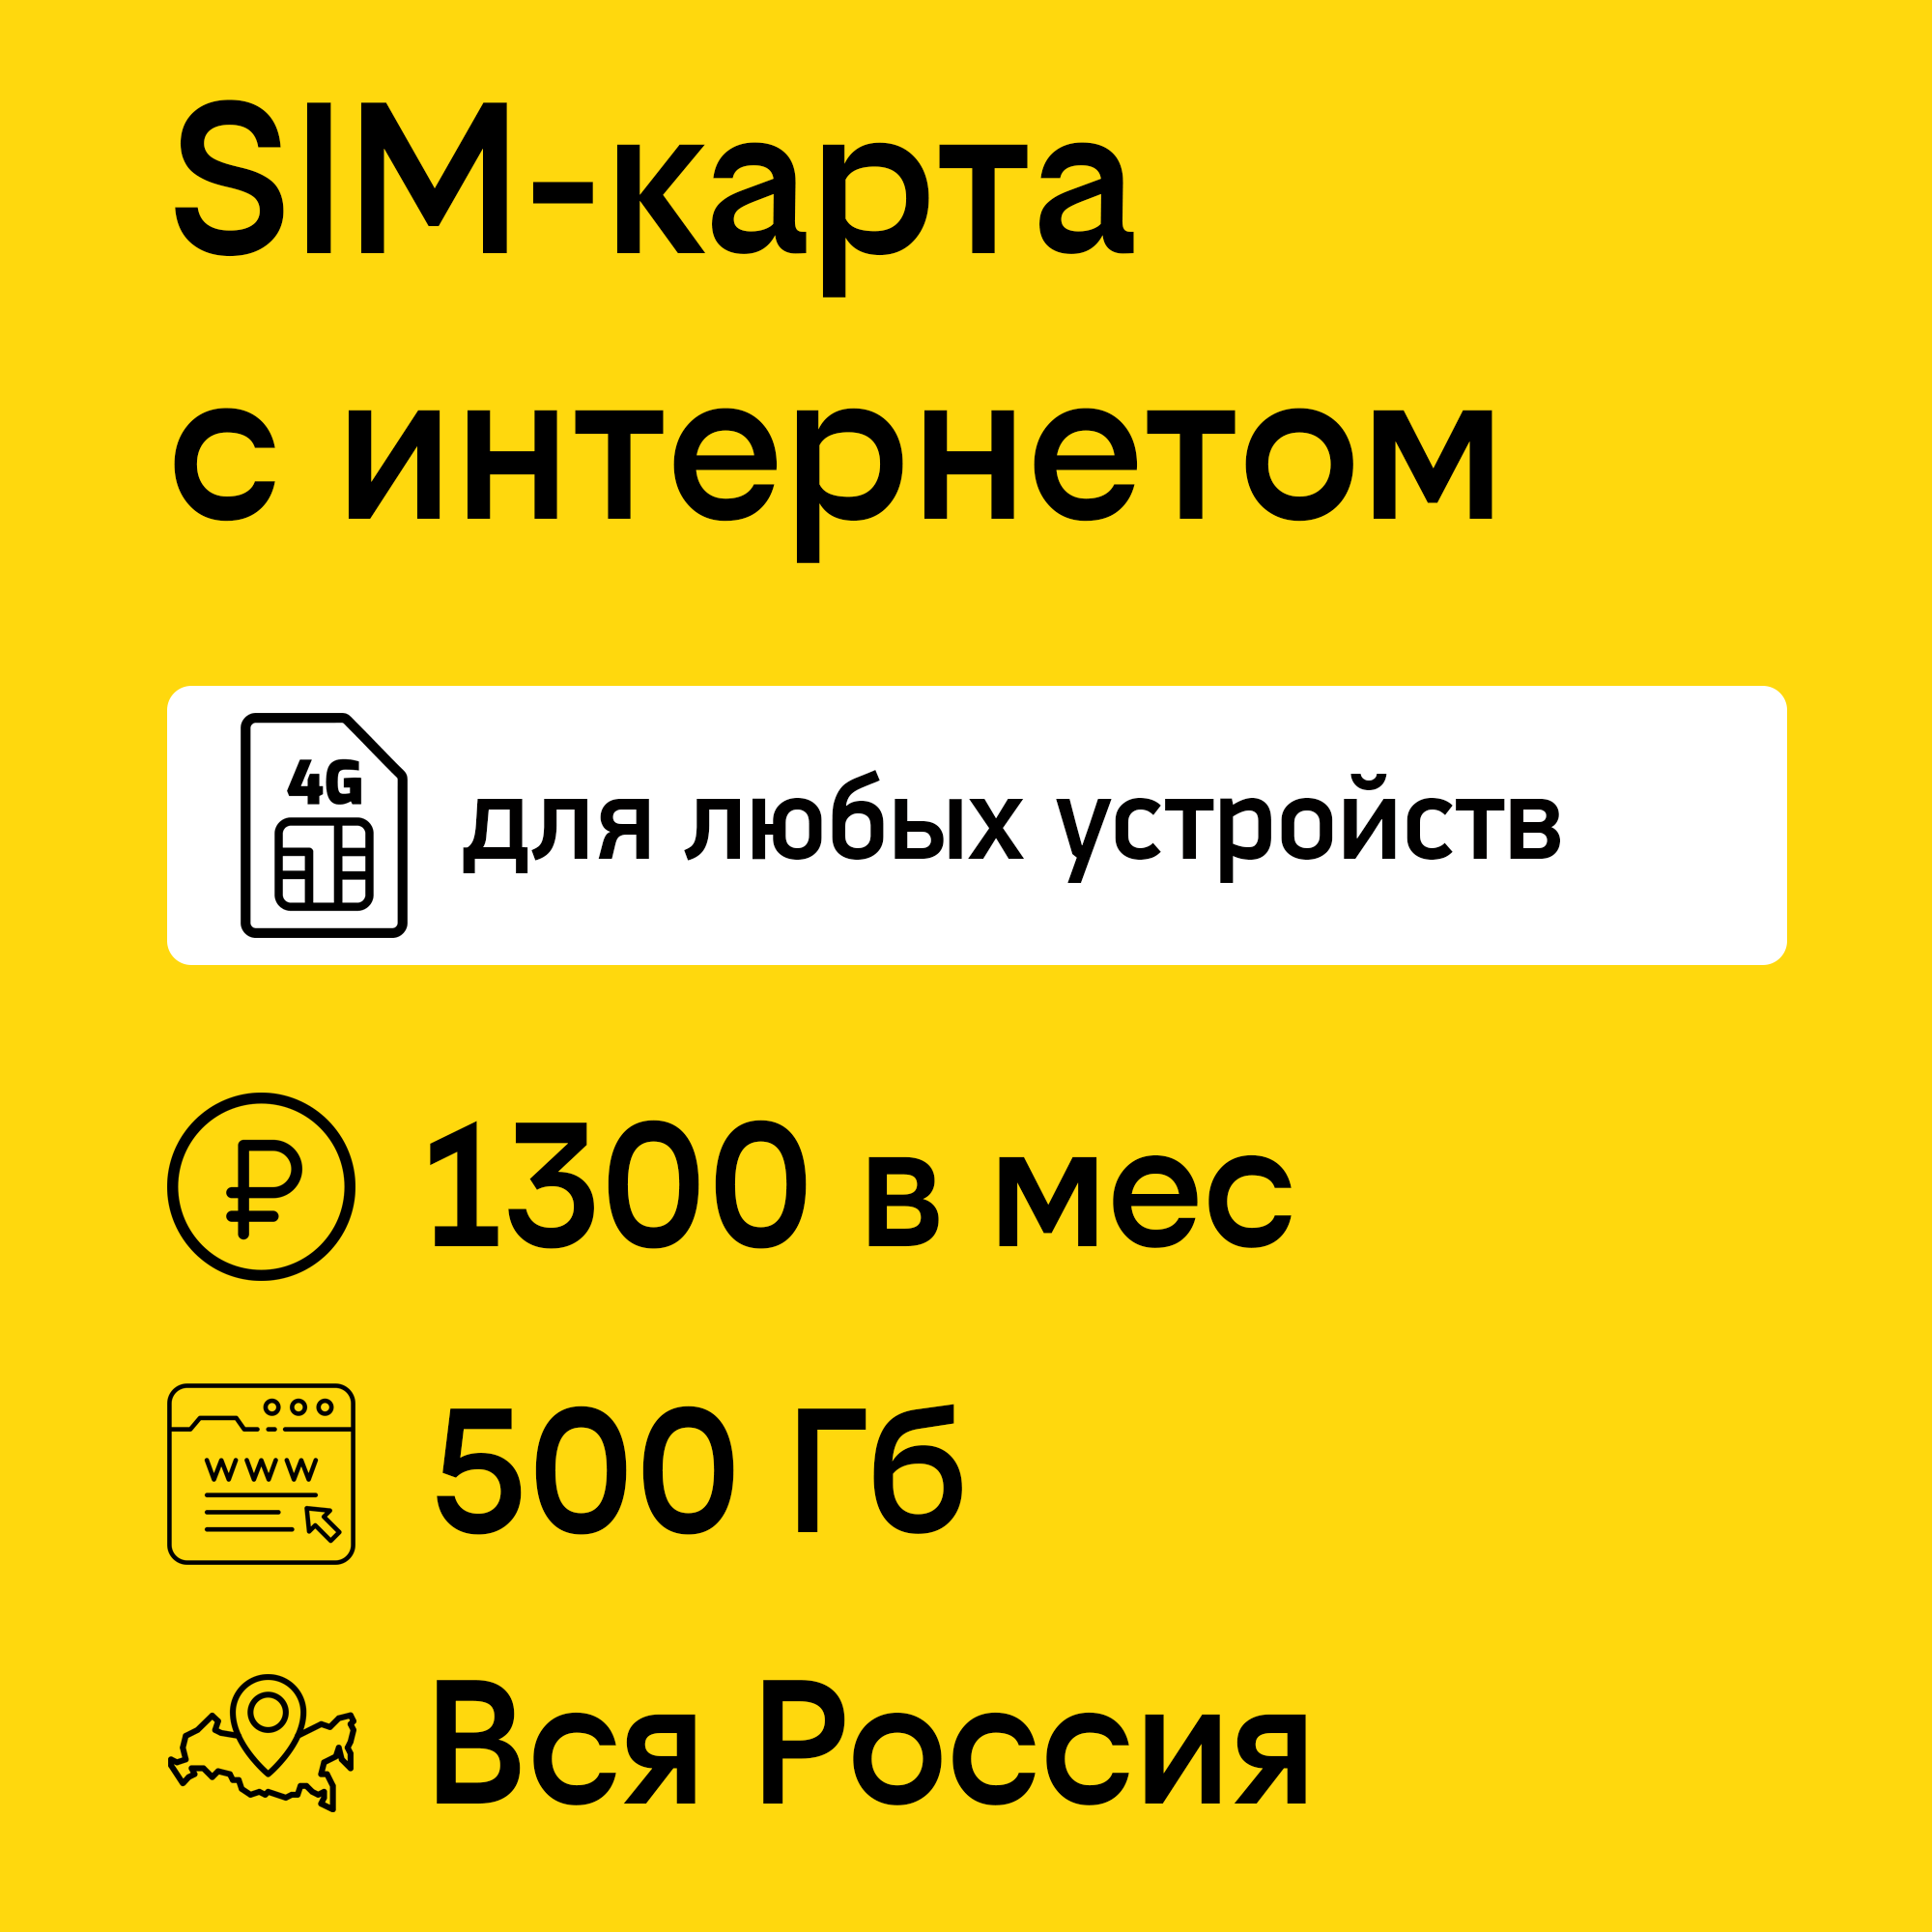 SIM-карта для модема и роутера 500 Гб за 1200 руб/мес. в сети Билайн